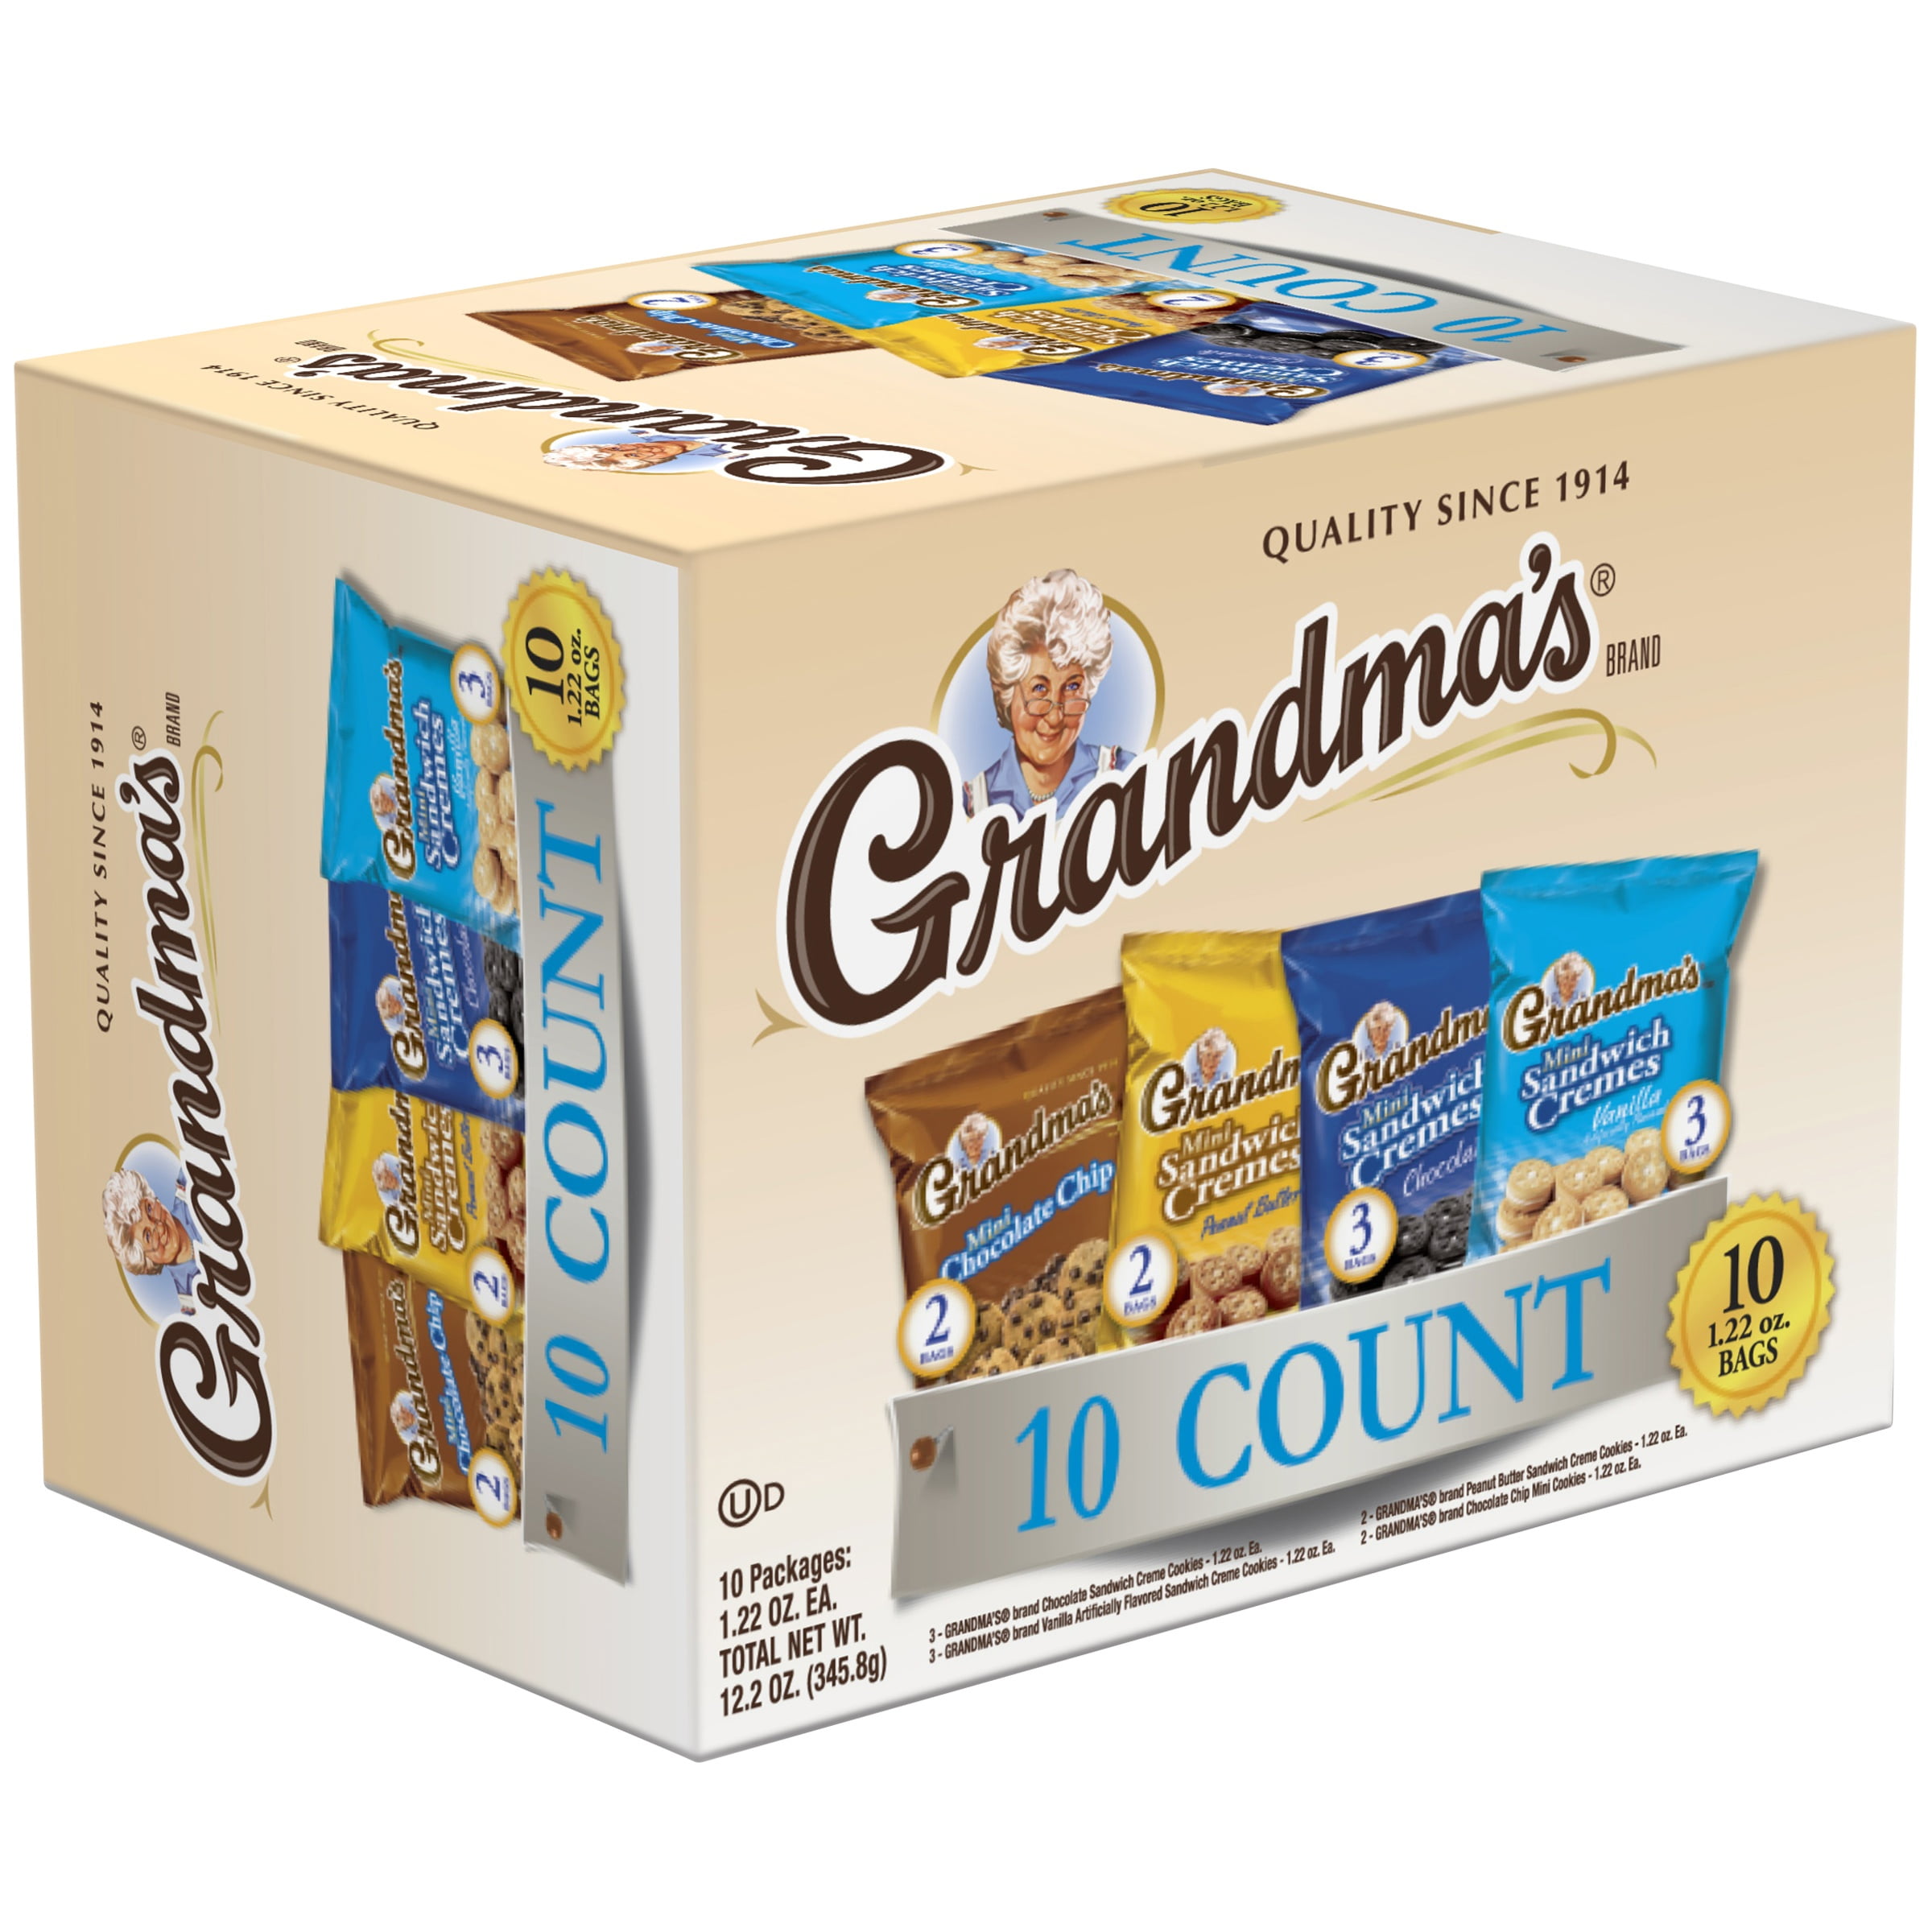 Grandma's Cookies In Box (Pack of 20)